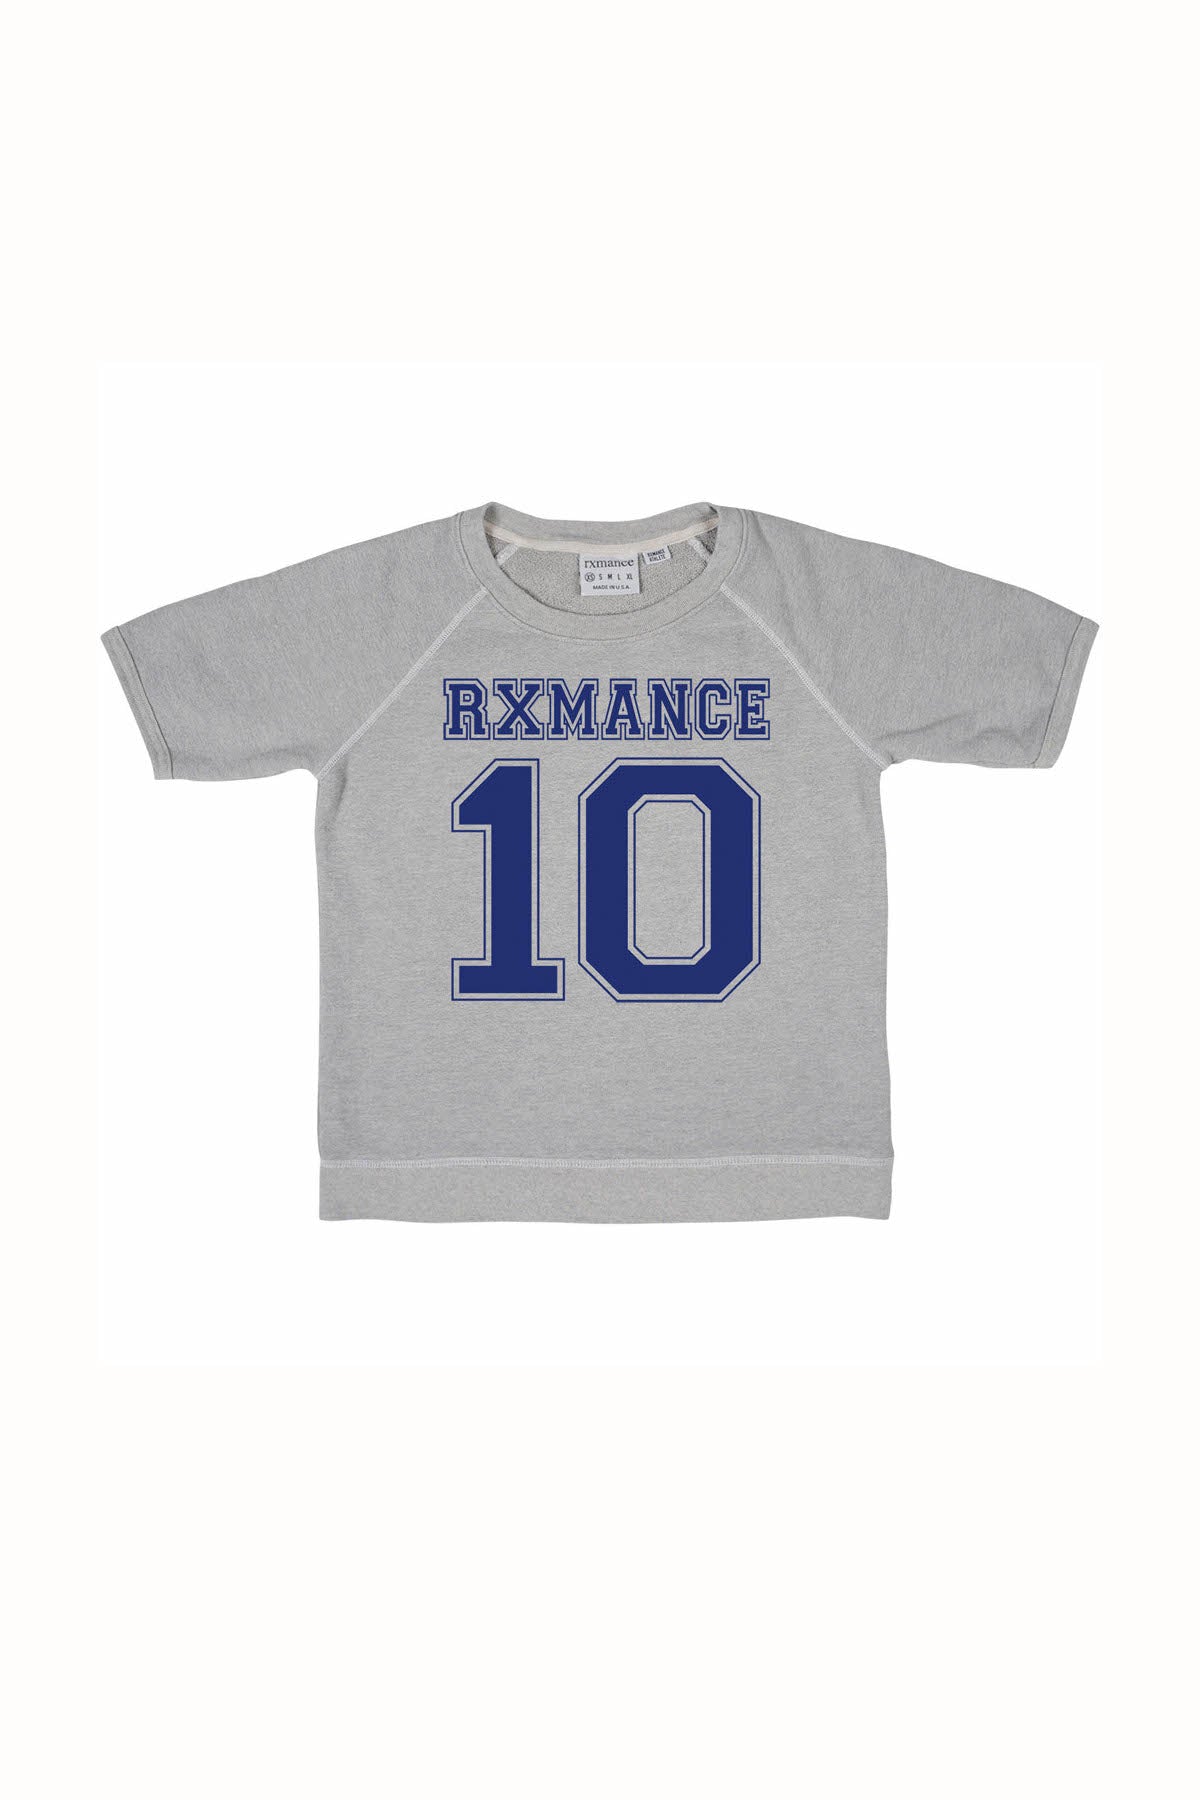 Rxmance Unisex Grey Jersey Short Sleeve Sweatshirt